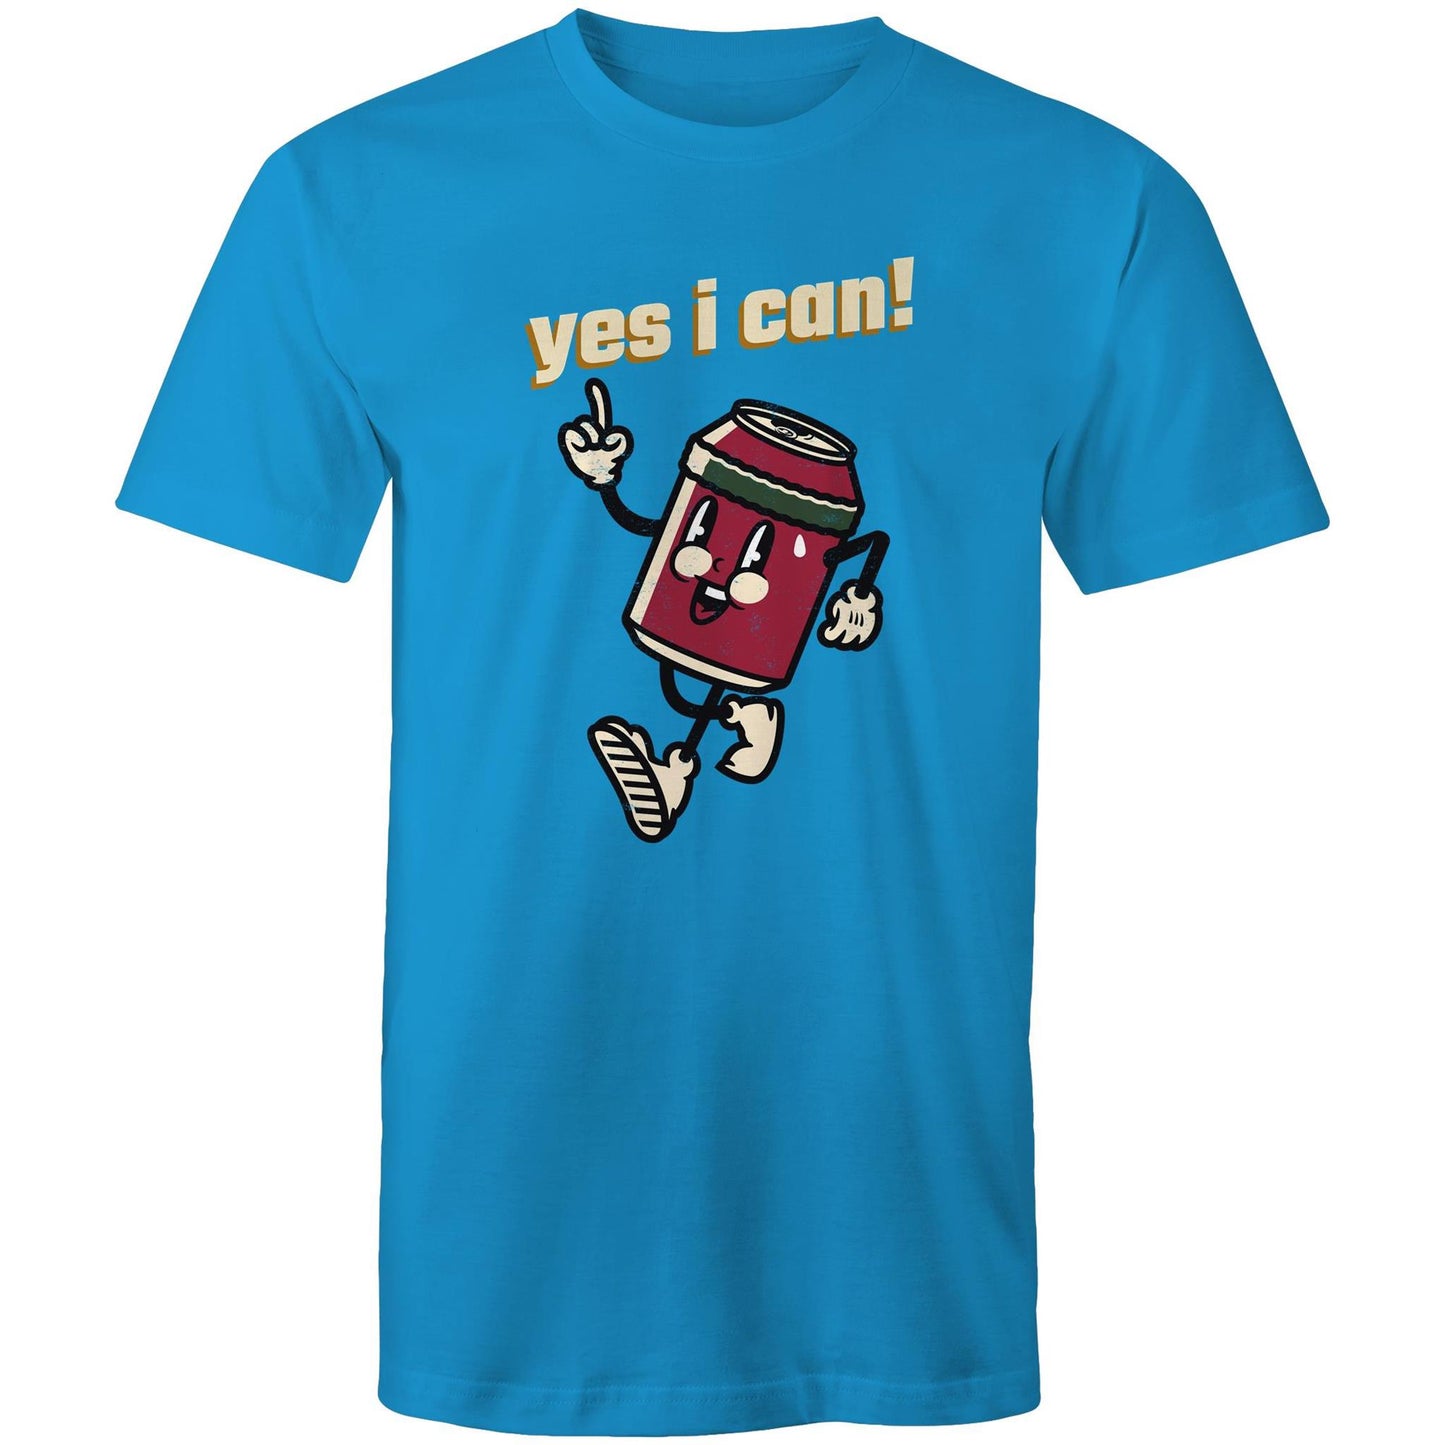 Yes I Can! - Mens T-Shirt Arctic Blue Mens T-shirt Motivation Retro